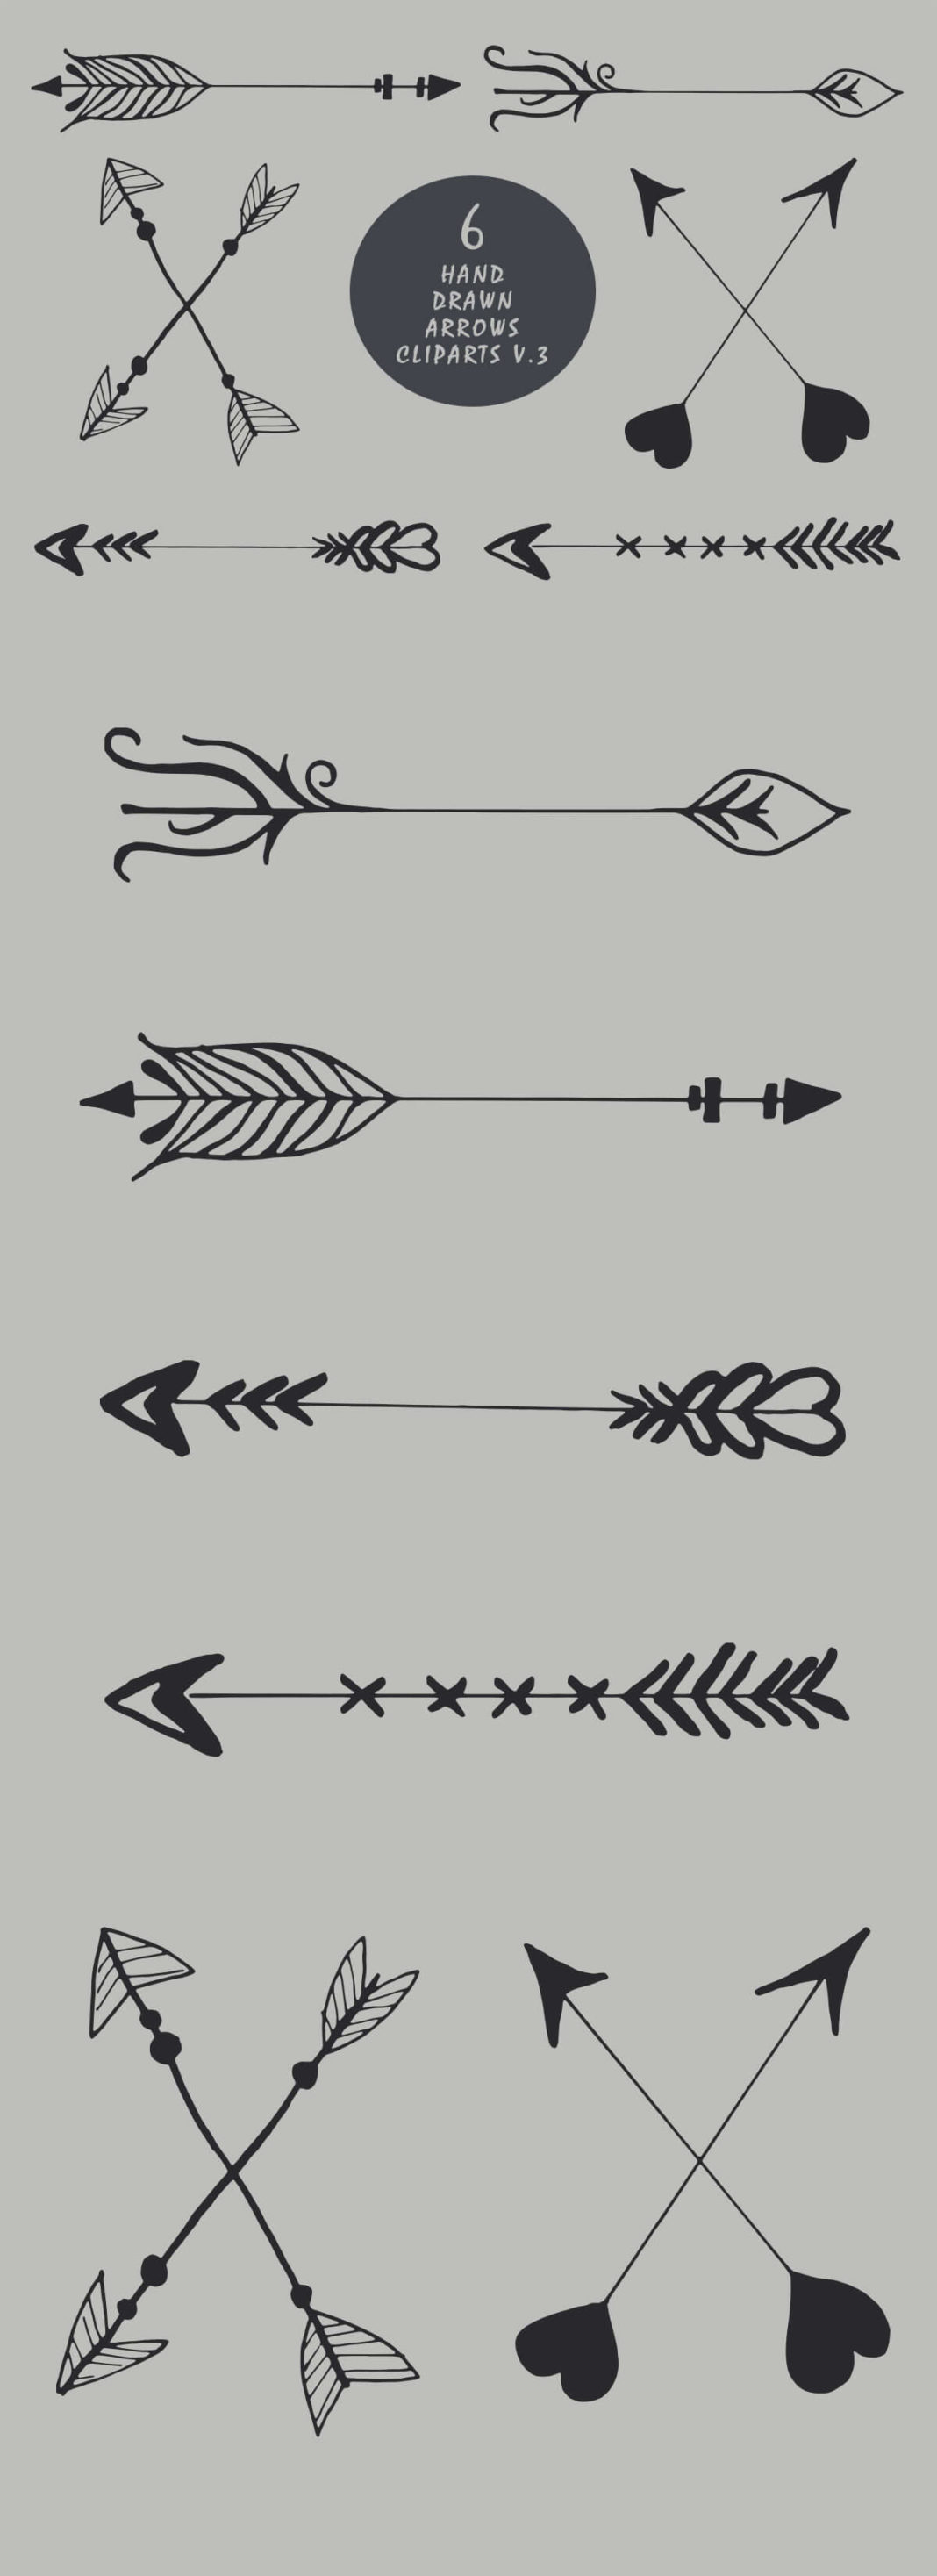 Handmade Arrows Cliparts V3 Free Download - Creativetacos